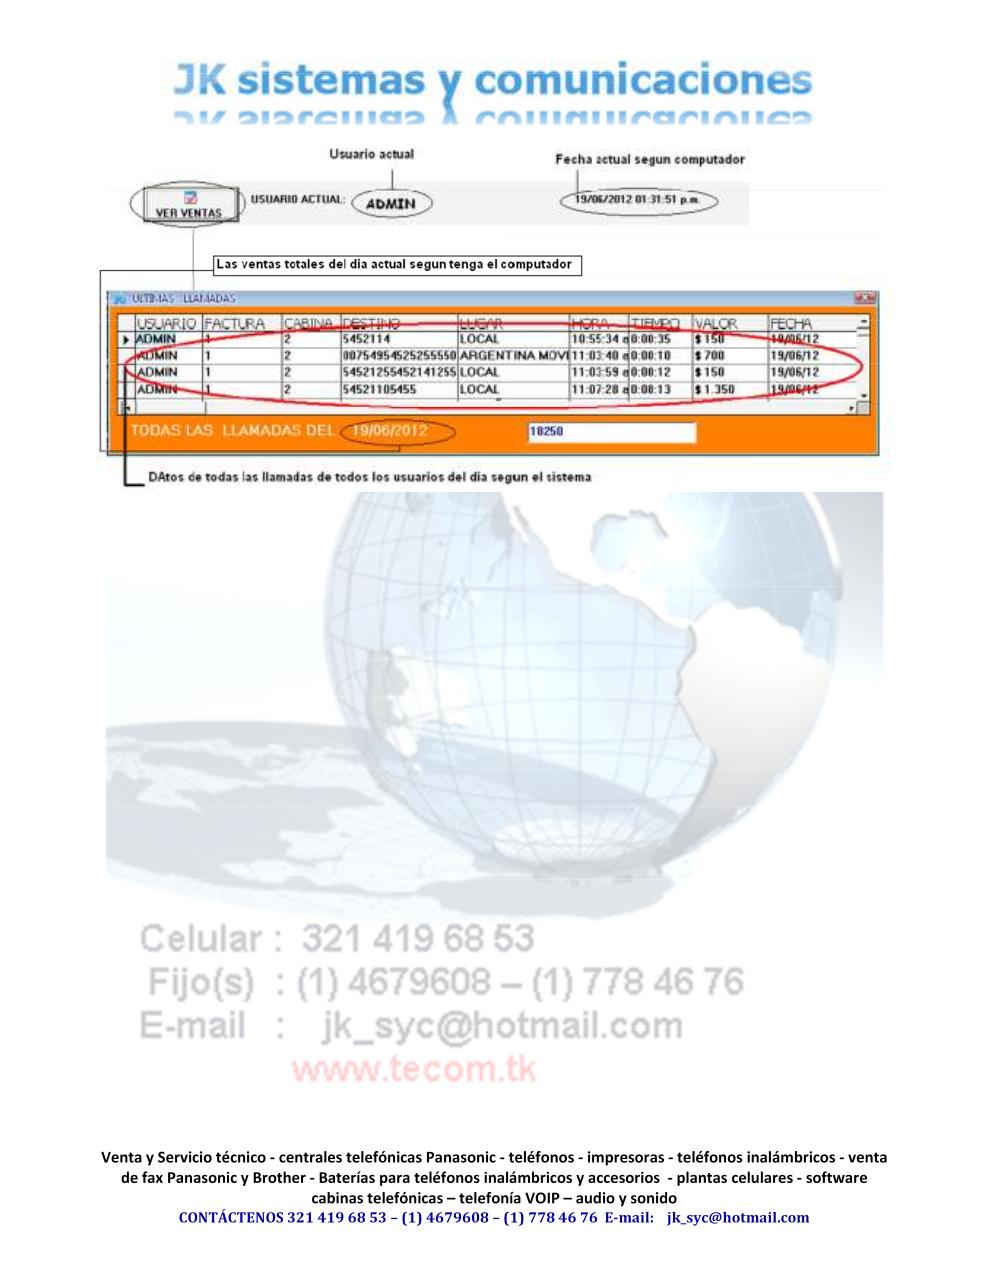 Vista previa del archivo PDF manual-software-cabinas-321-419-68-53-1-467-96-08.pdf